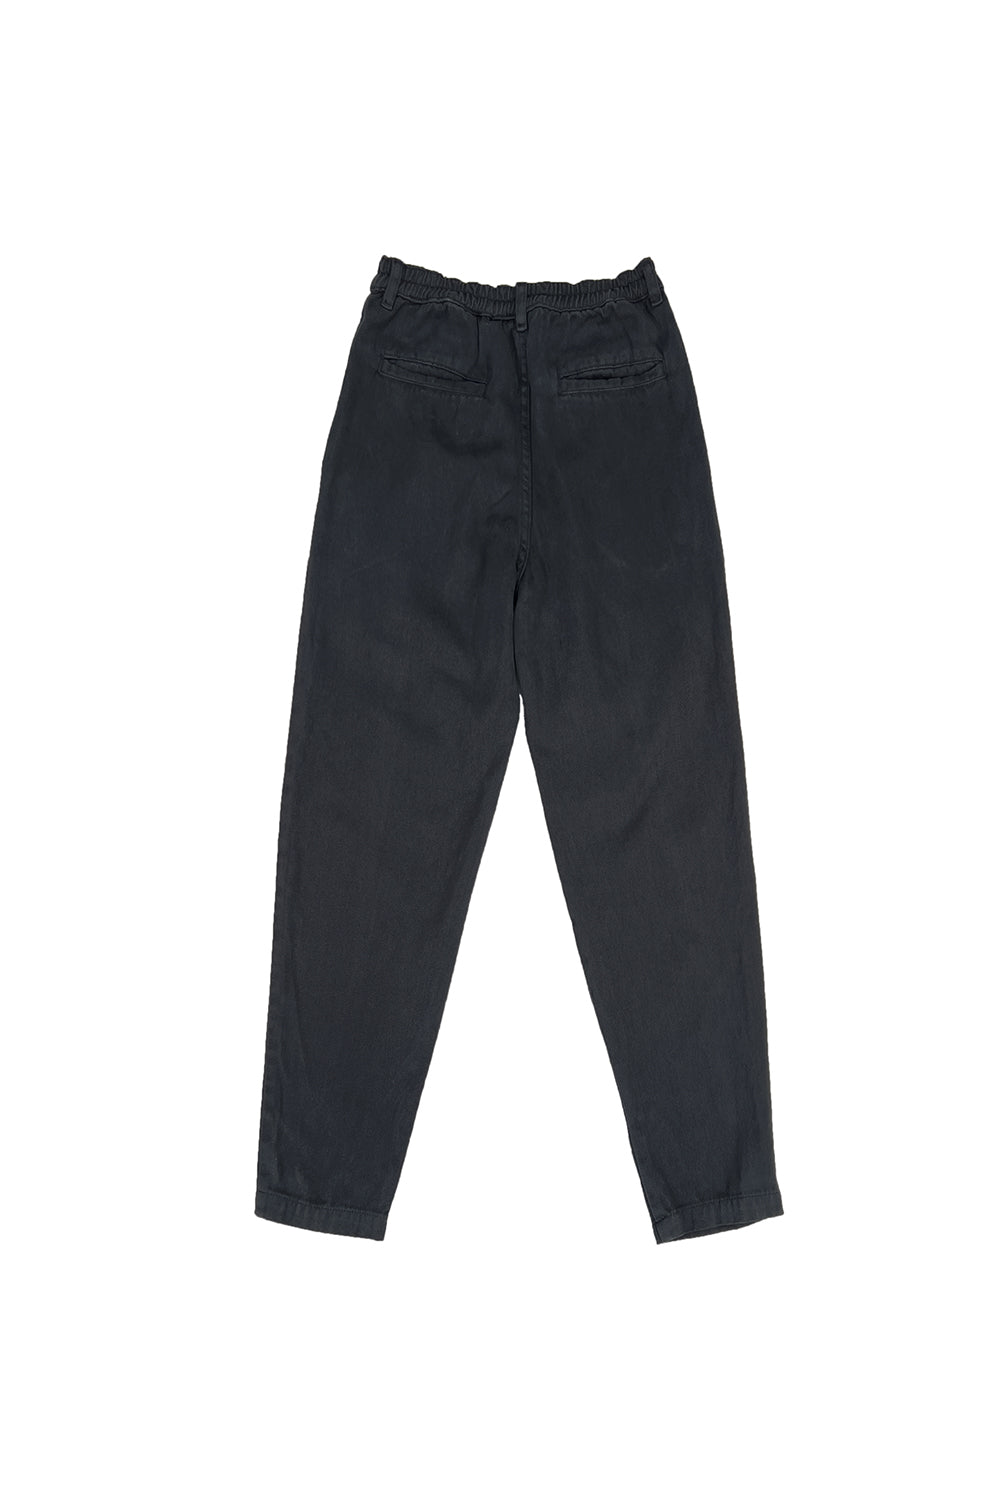 Acuma Pant | Jungmaven Hemp Clothing & Accessories / model_desc: Back in Black